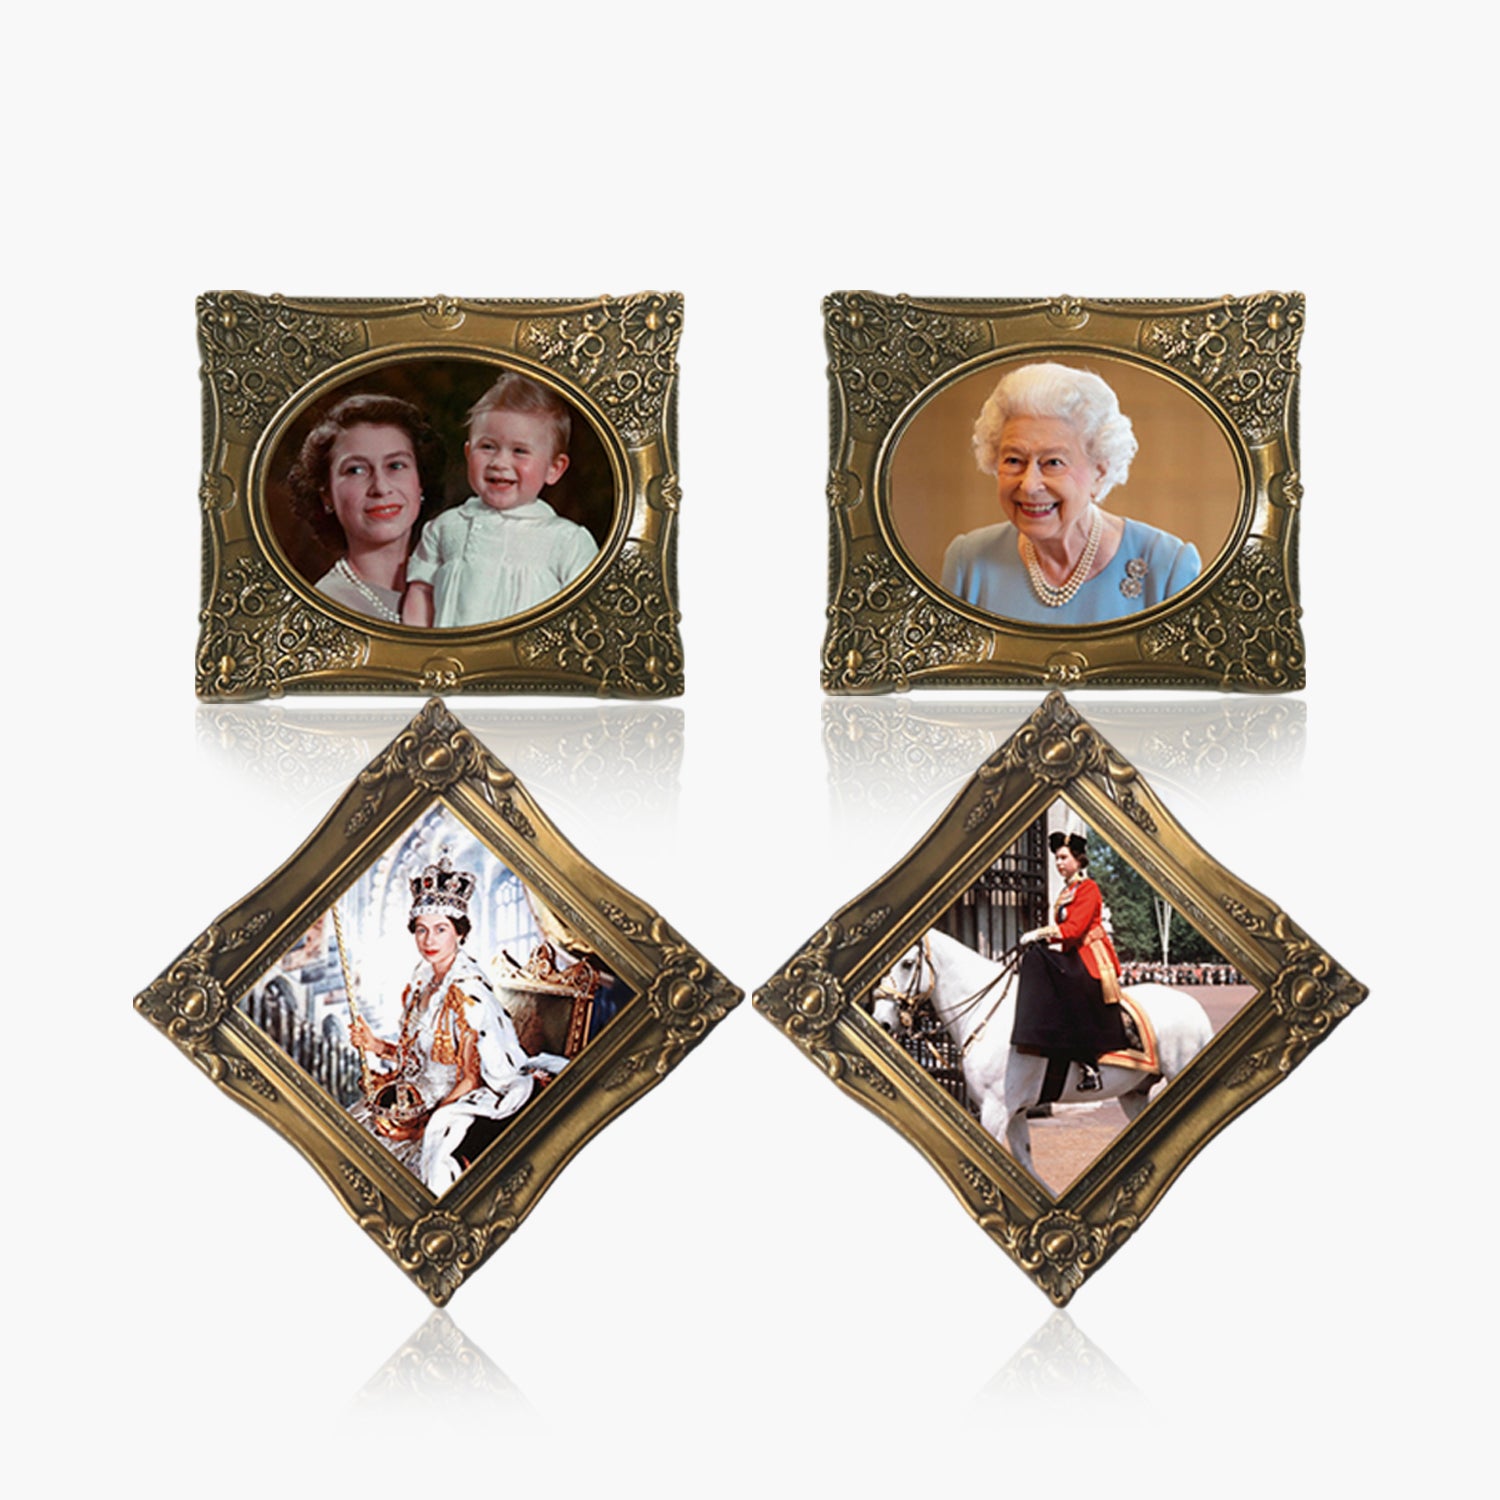 A Life in Portrait - Queen Elizabeth II Complete Collection